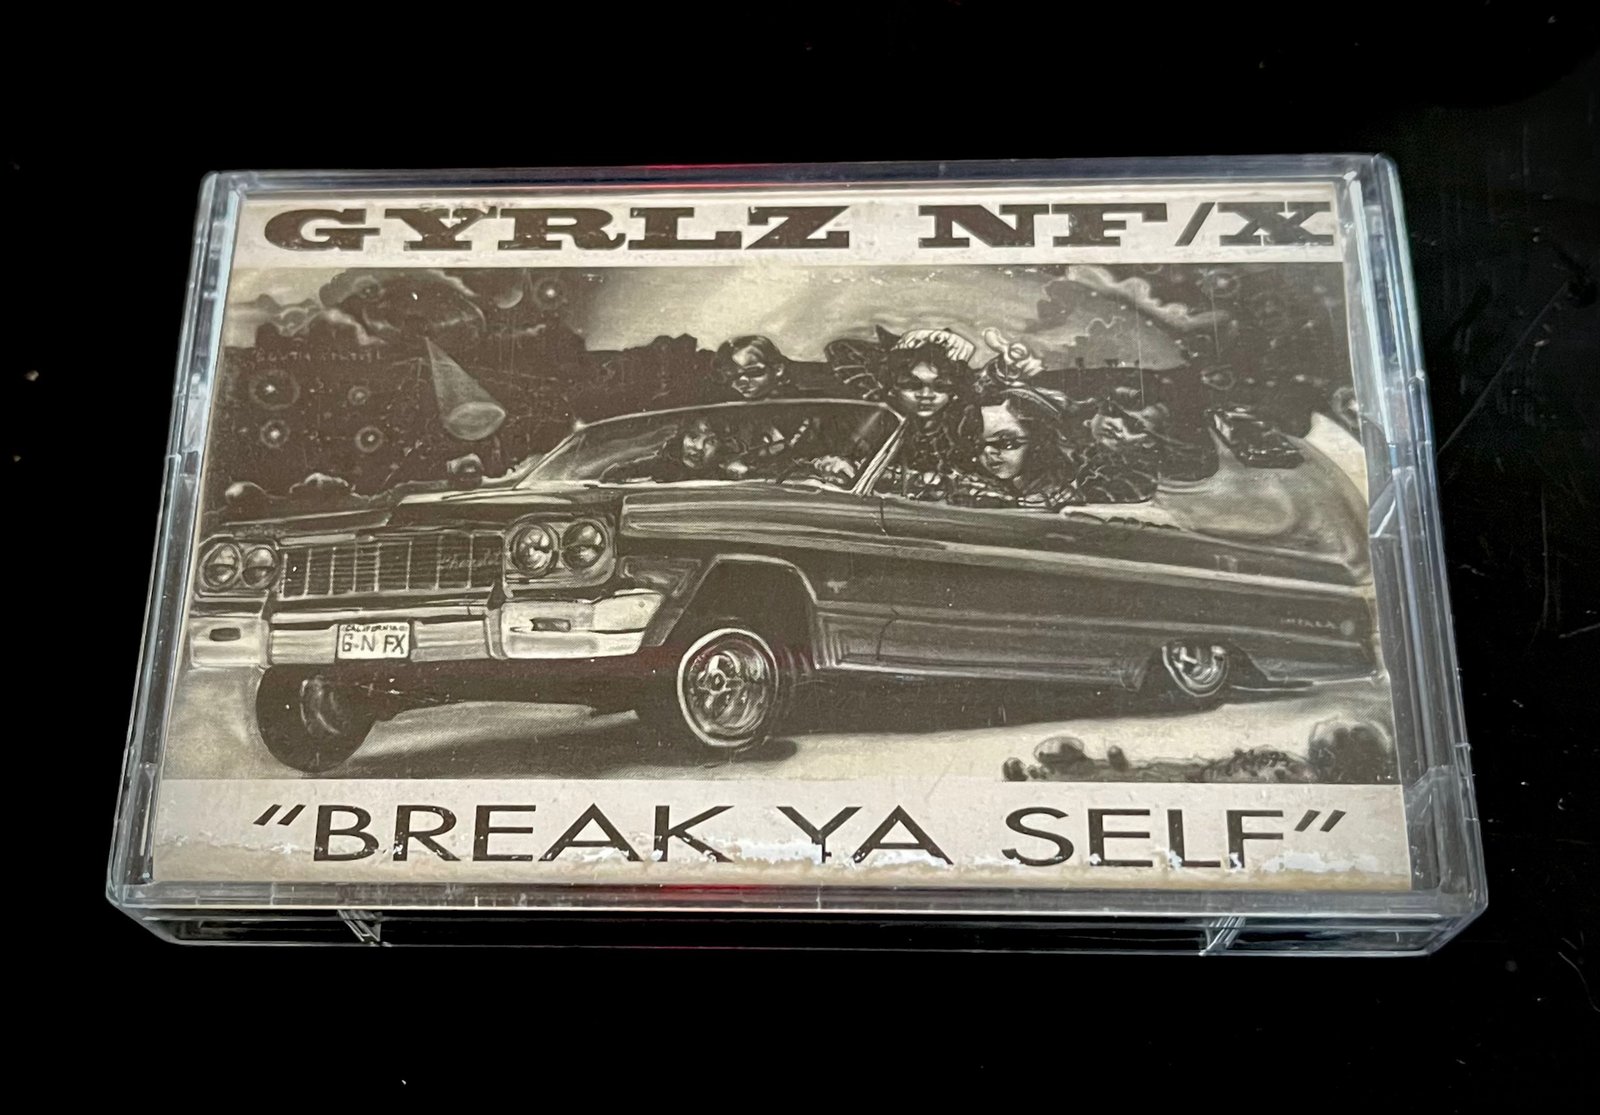 GYRLZ NF/X “BREAK YA SELF” | Throwdown Records